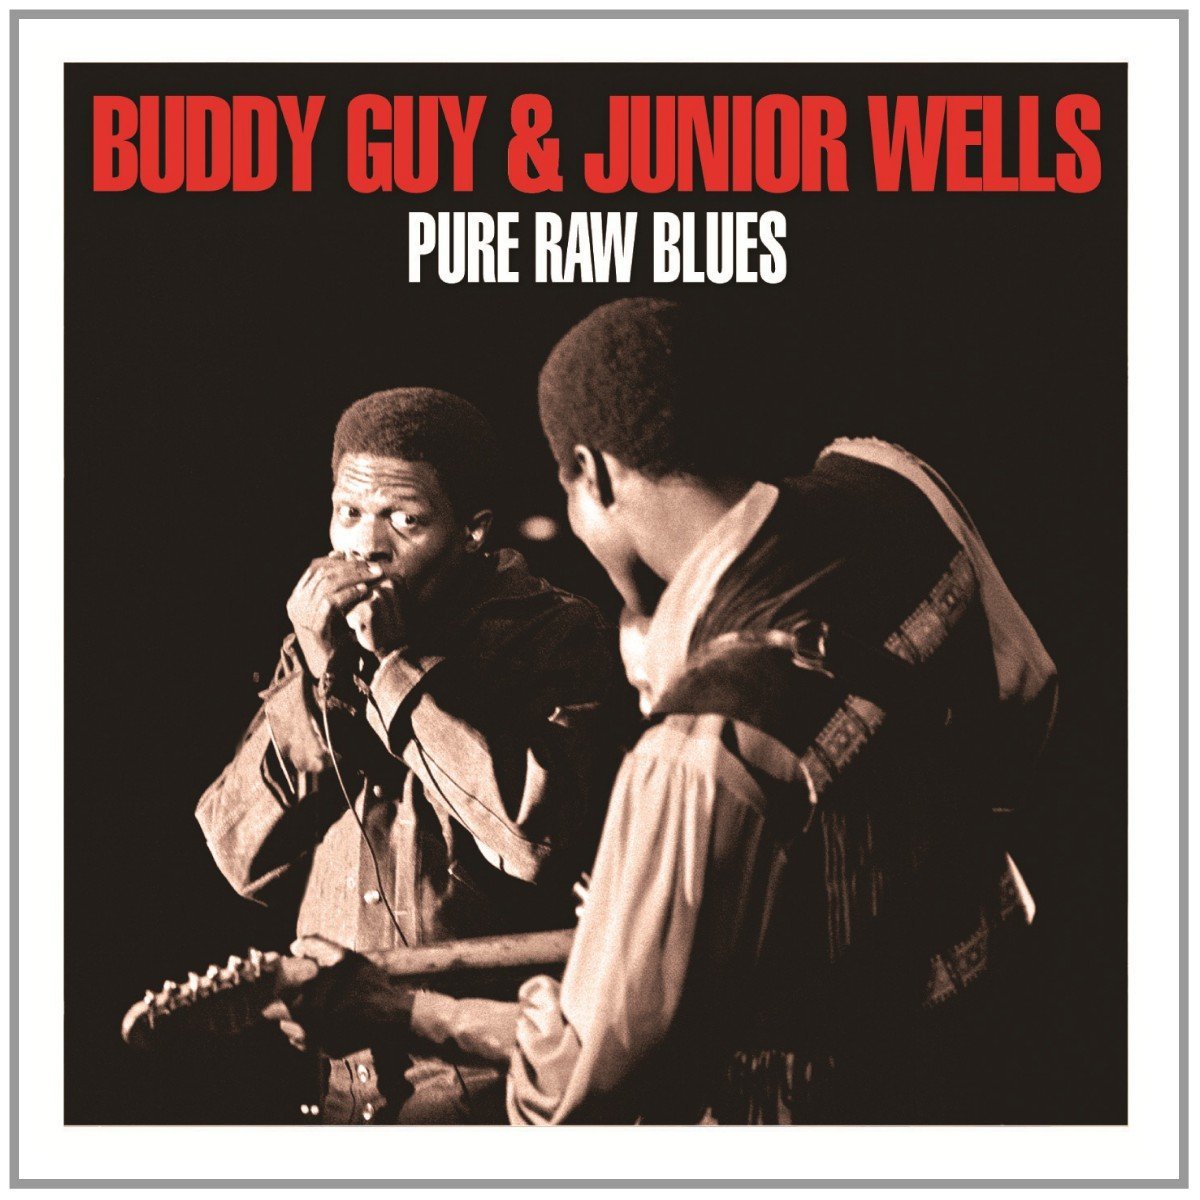 Buddy Guy&Junior Wells - Pure Raw Blues - 2CD